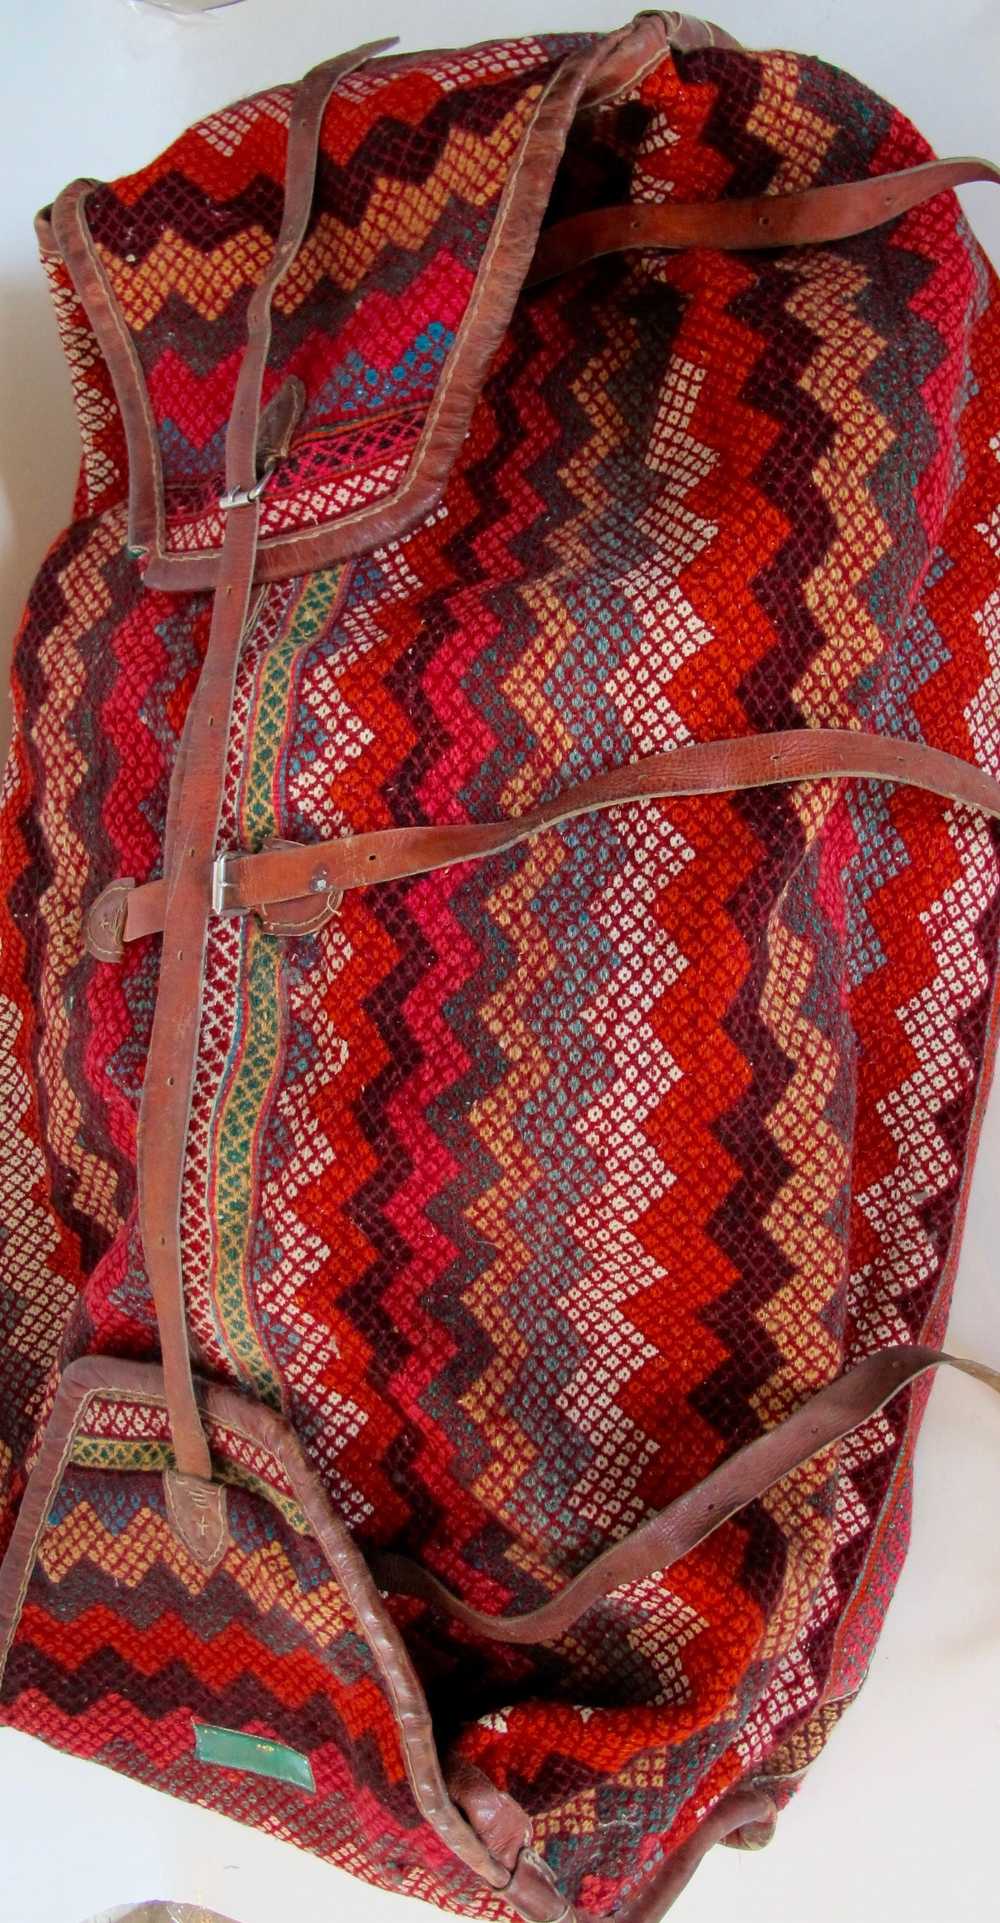 Tribal Hand-Woven Carpet Storage Bag - image 5